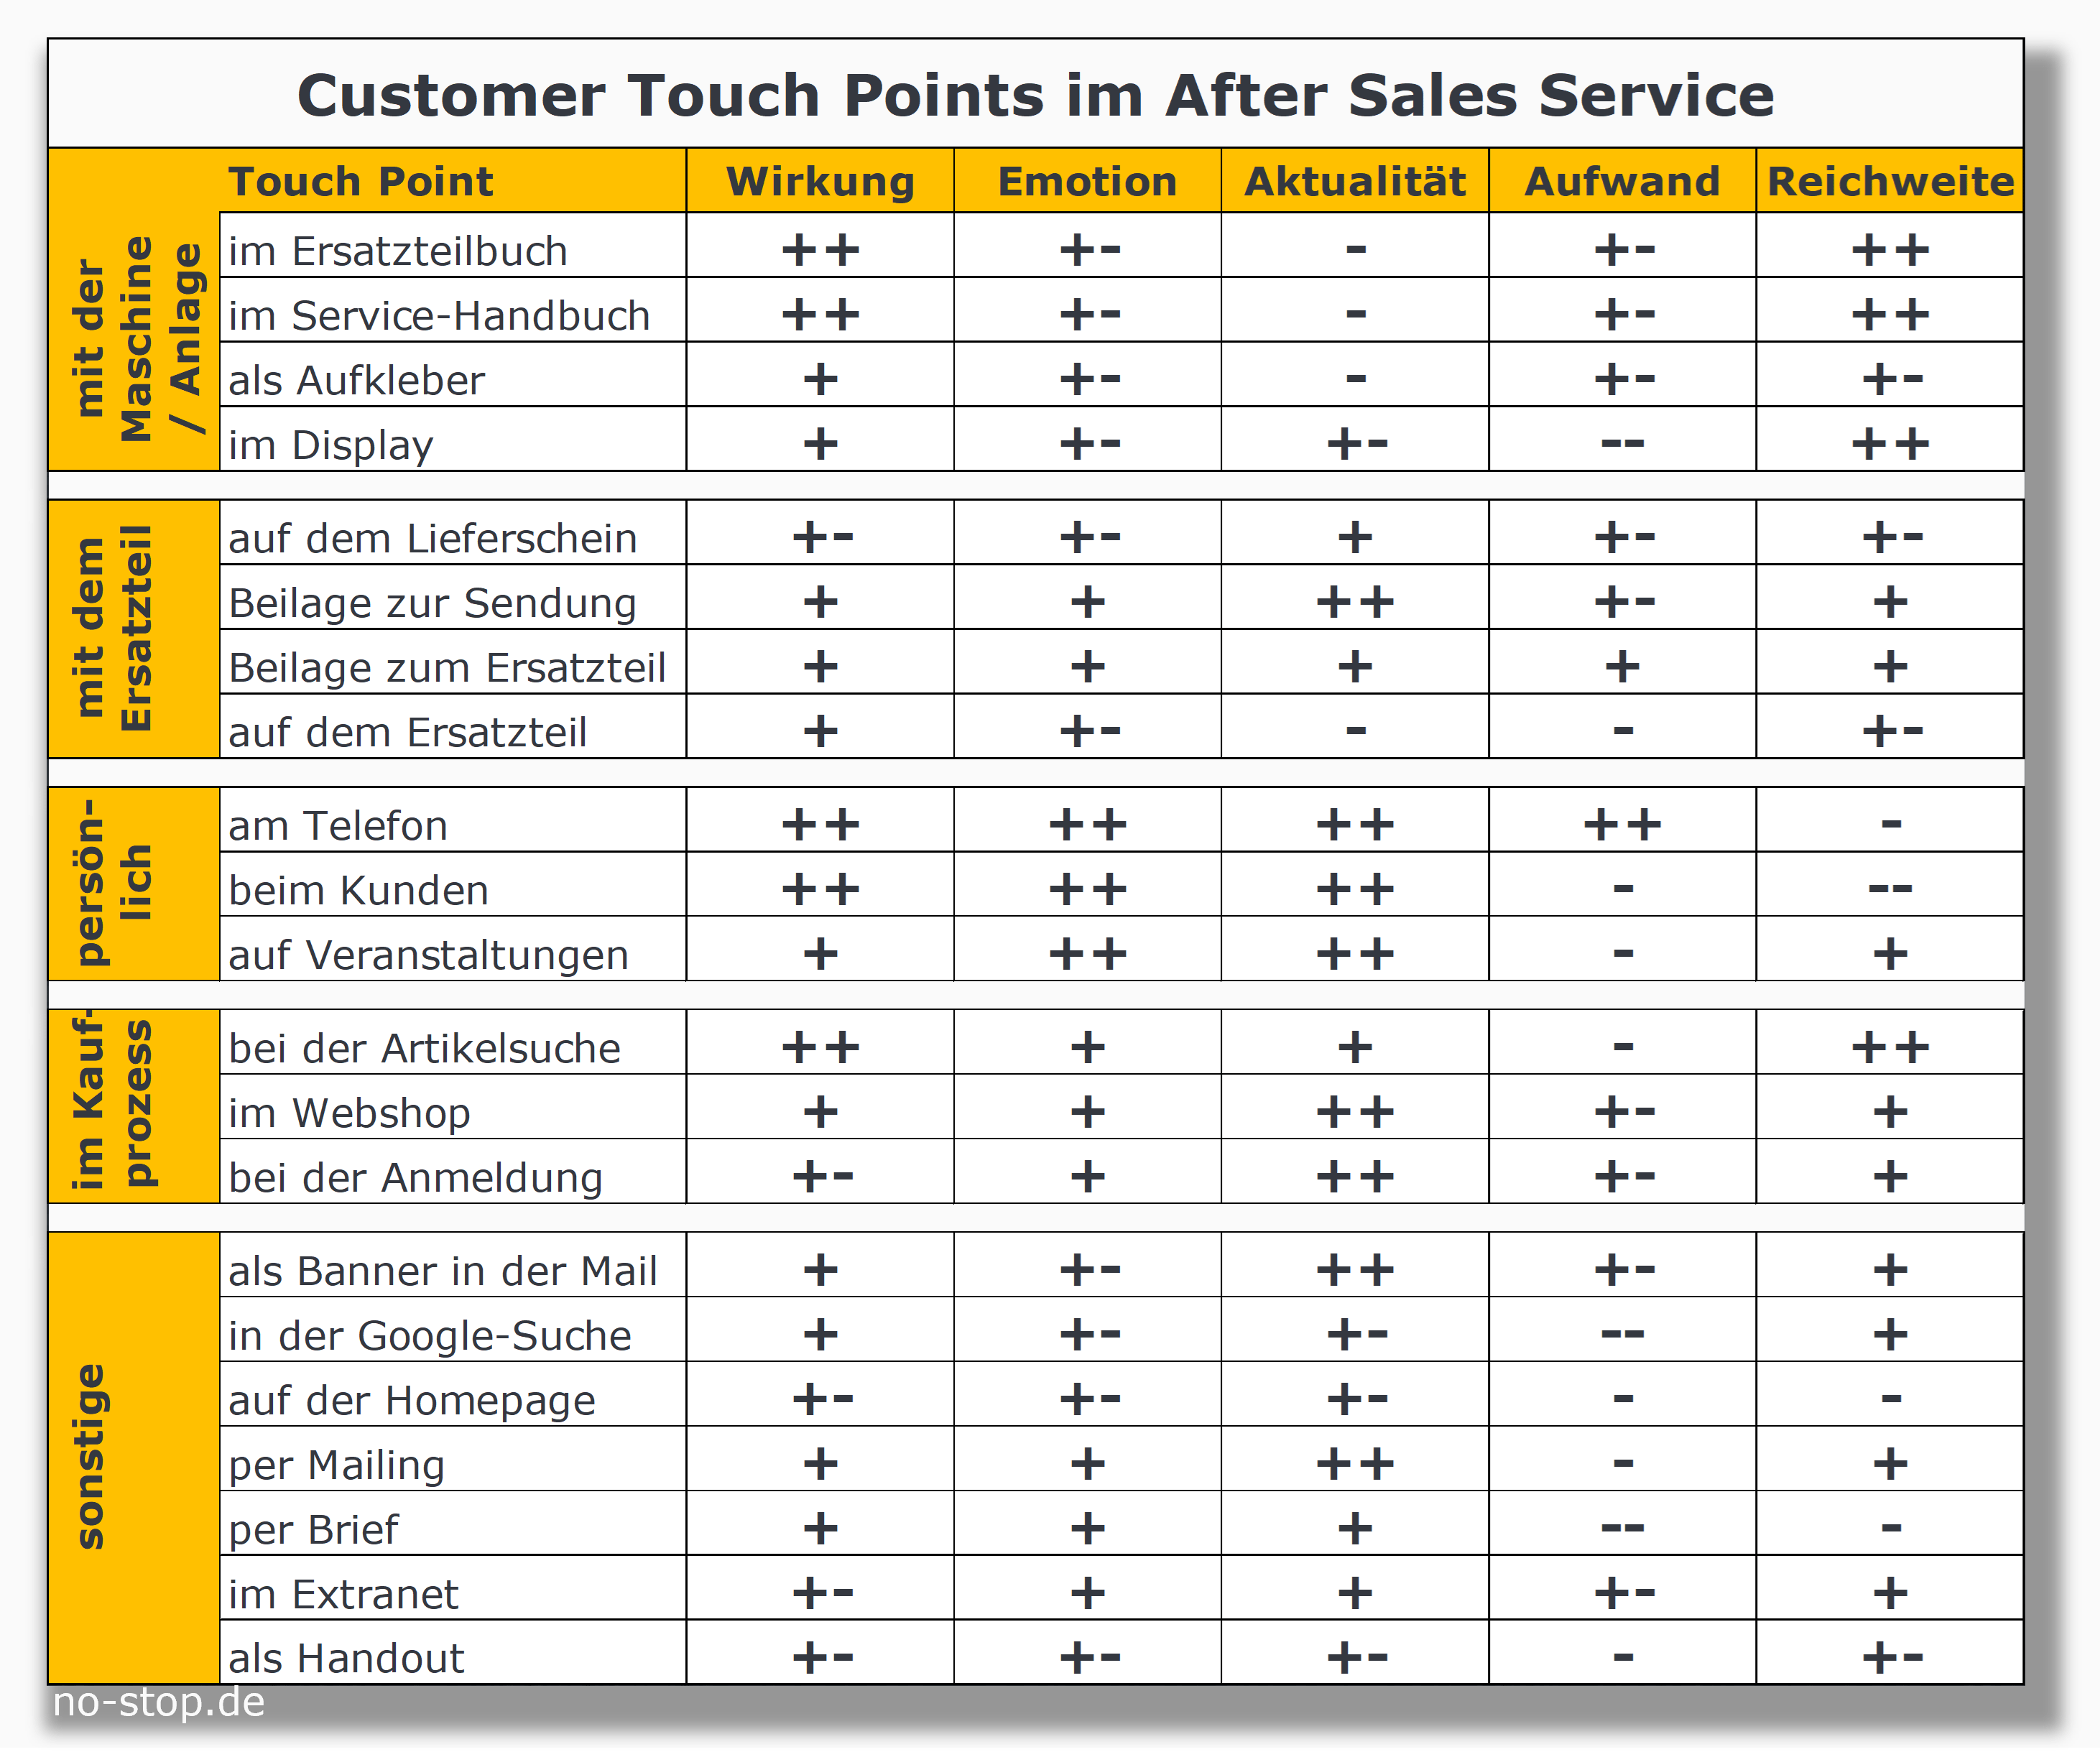 Customer Touch Points im After Sales Service des Maschinenbaus